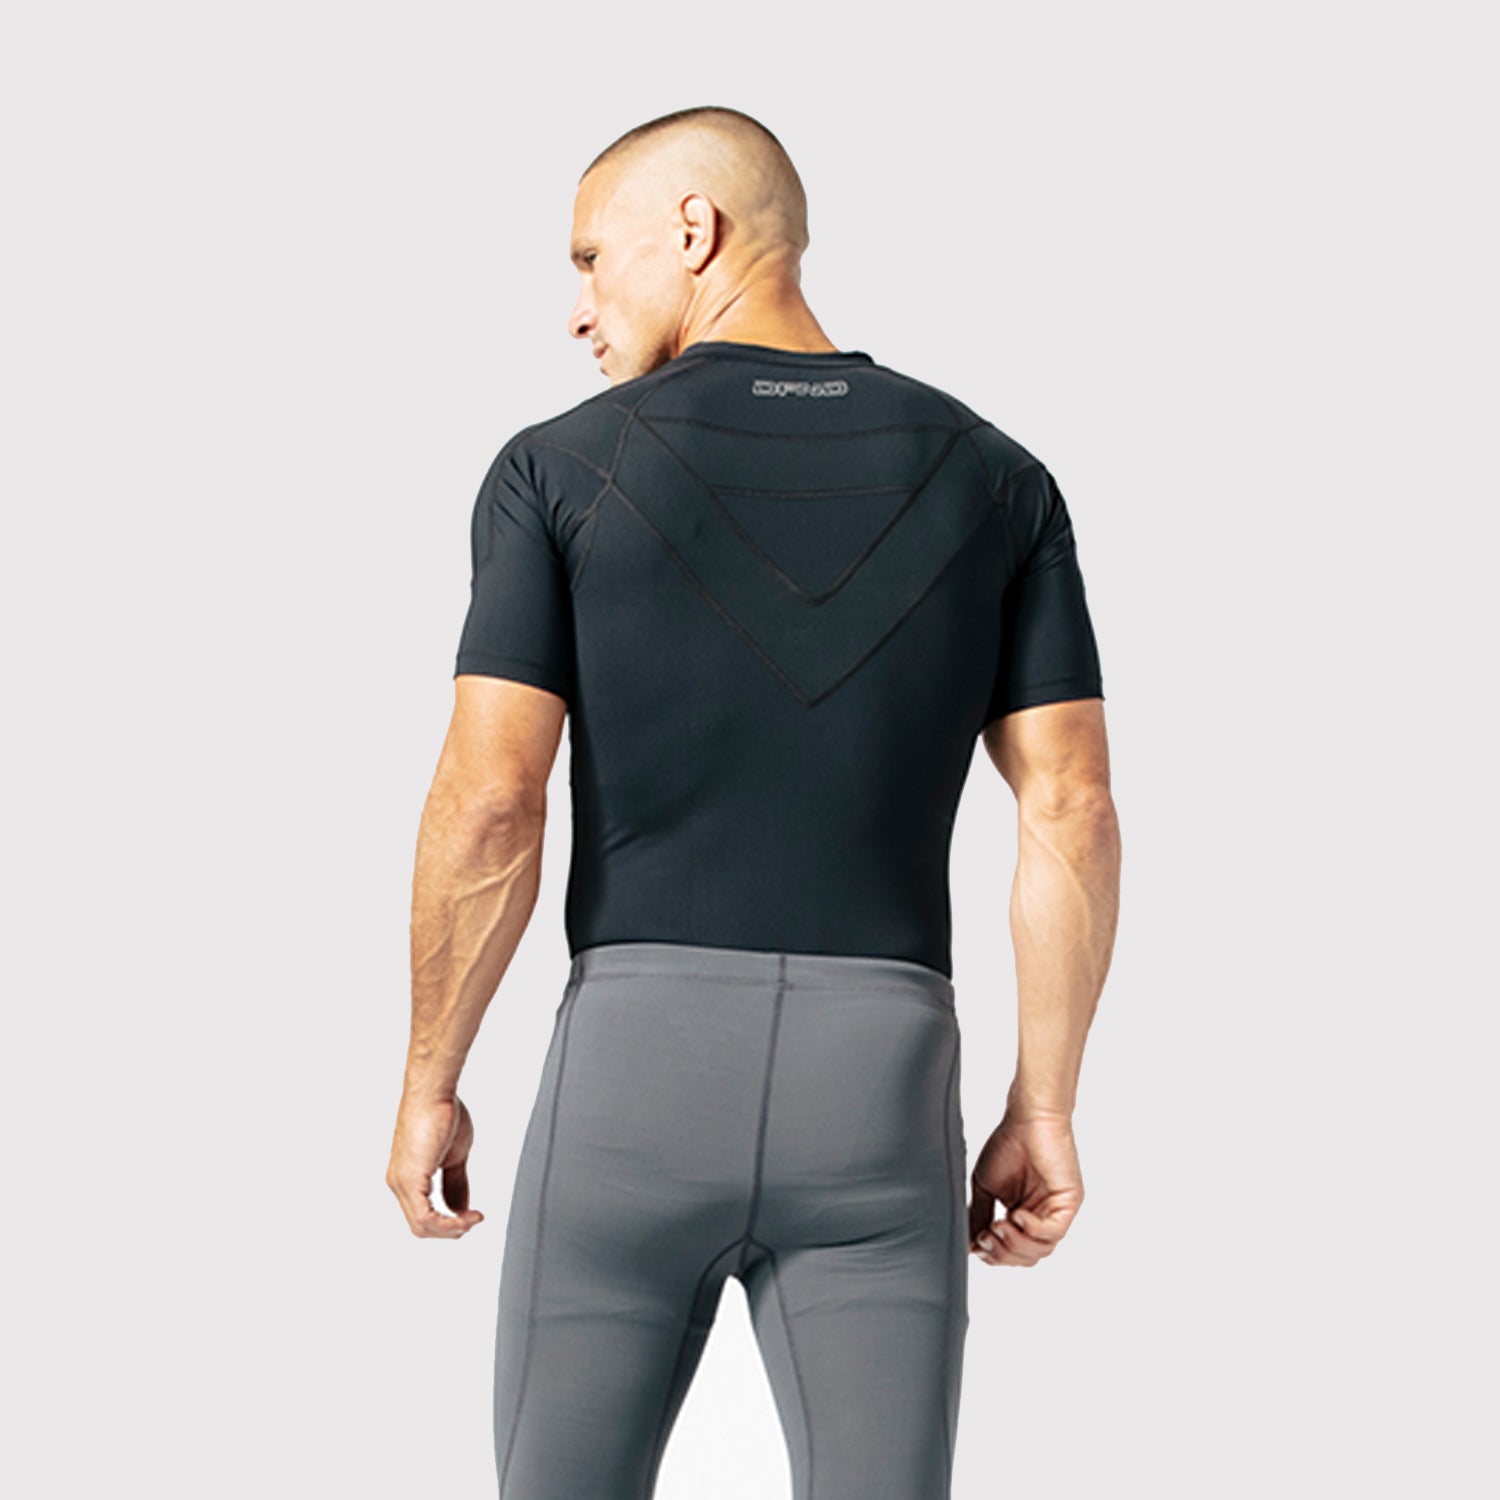 Posture Shirt® For Men - Zipper